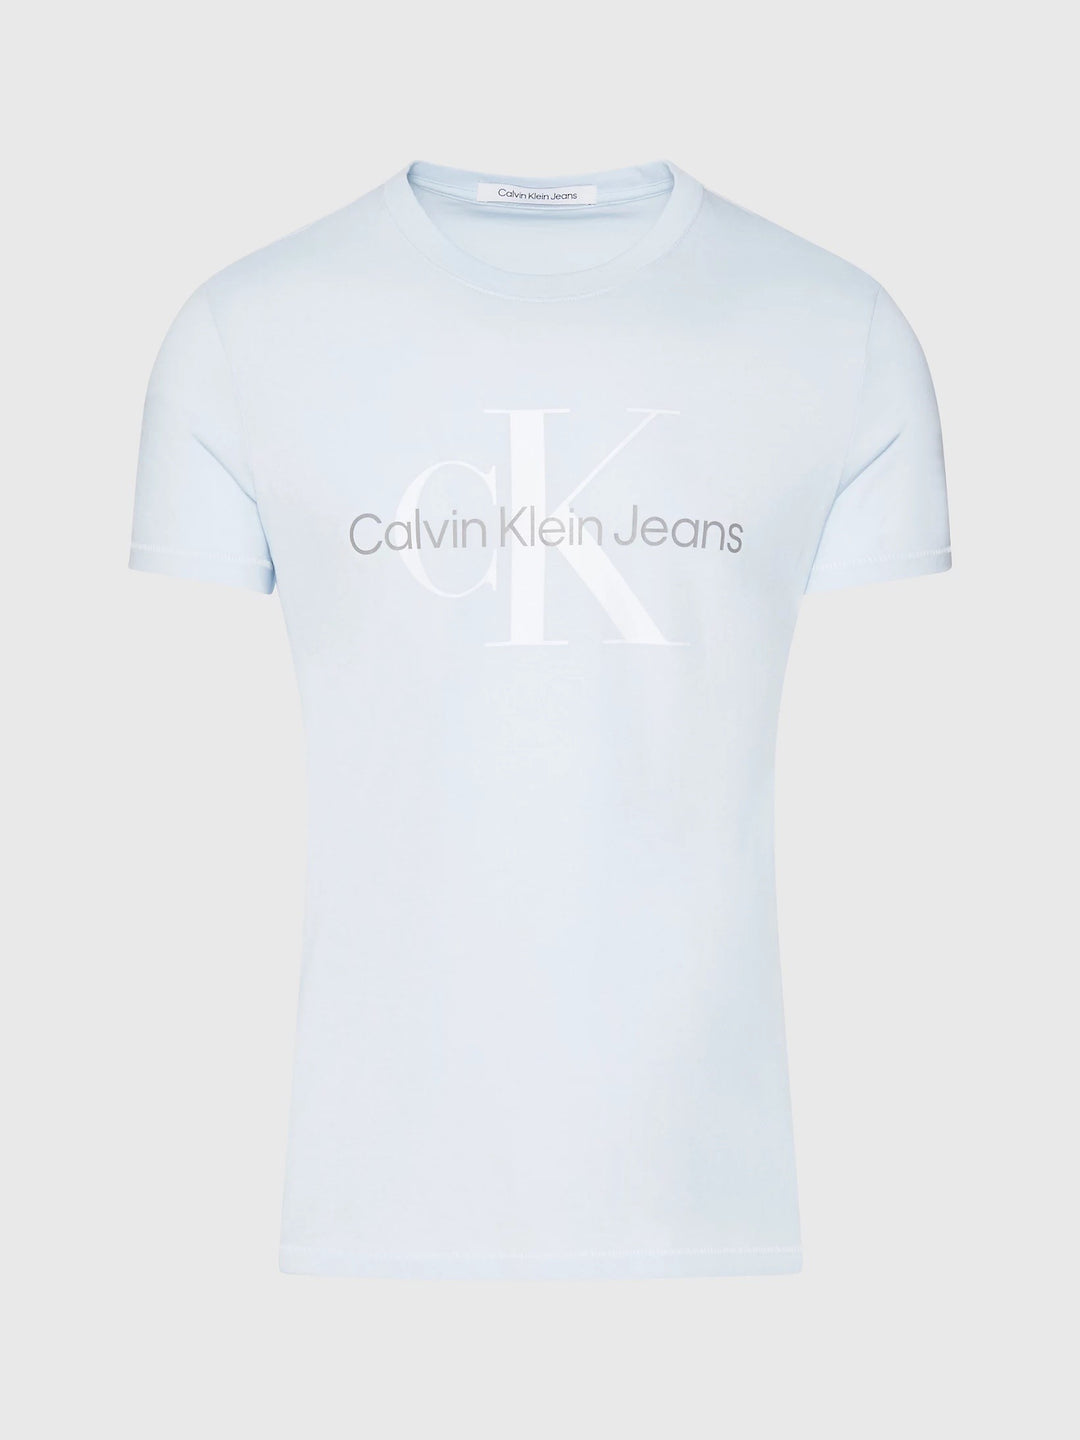 CALVIN KLEIN JEANS 2 – – W Menswear Page T